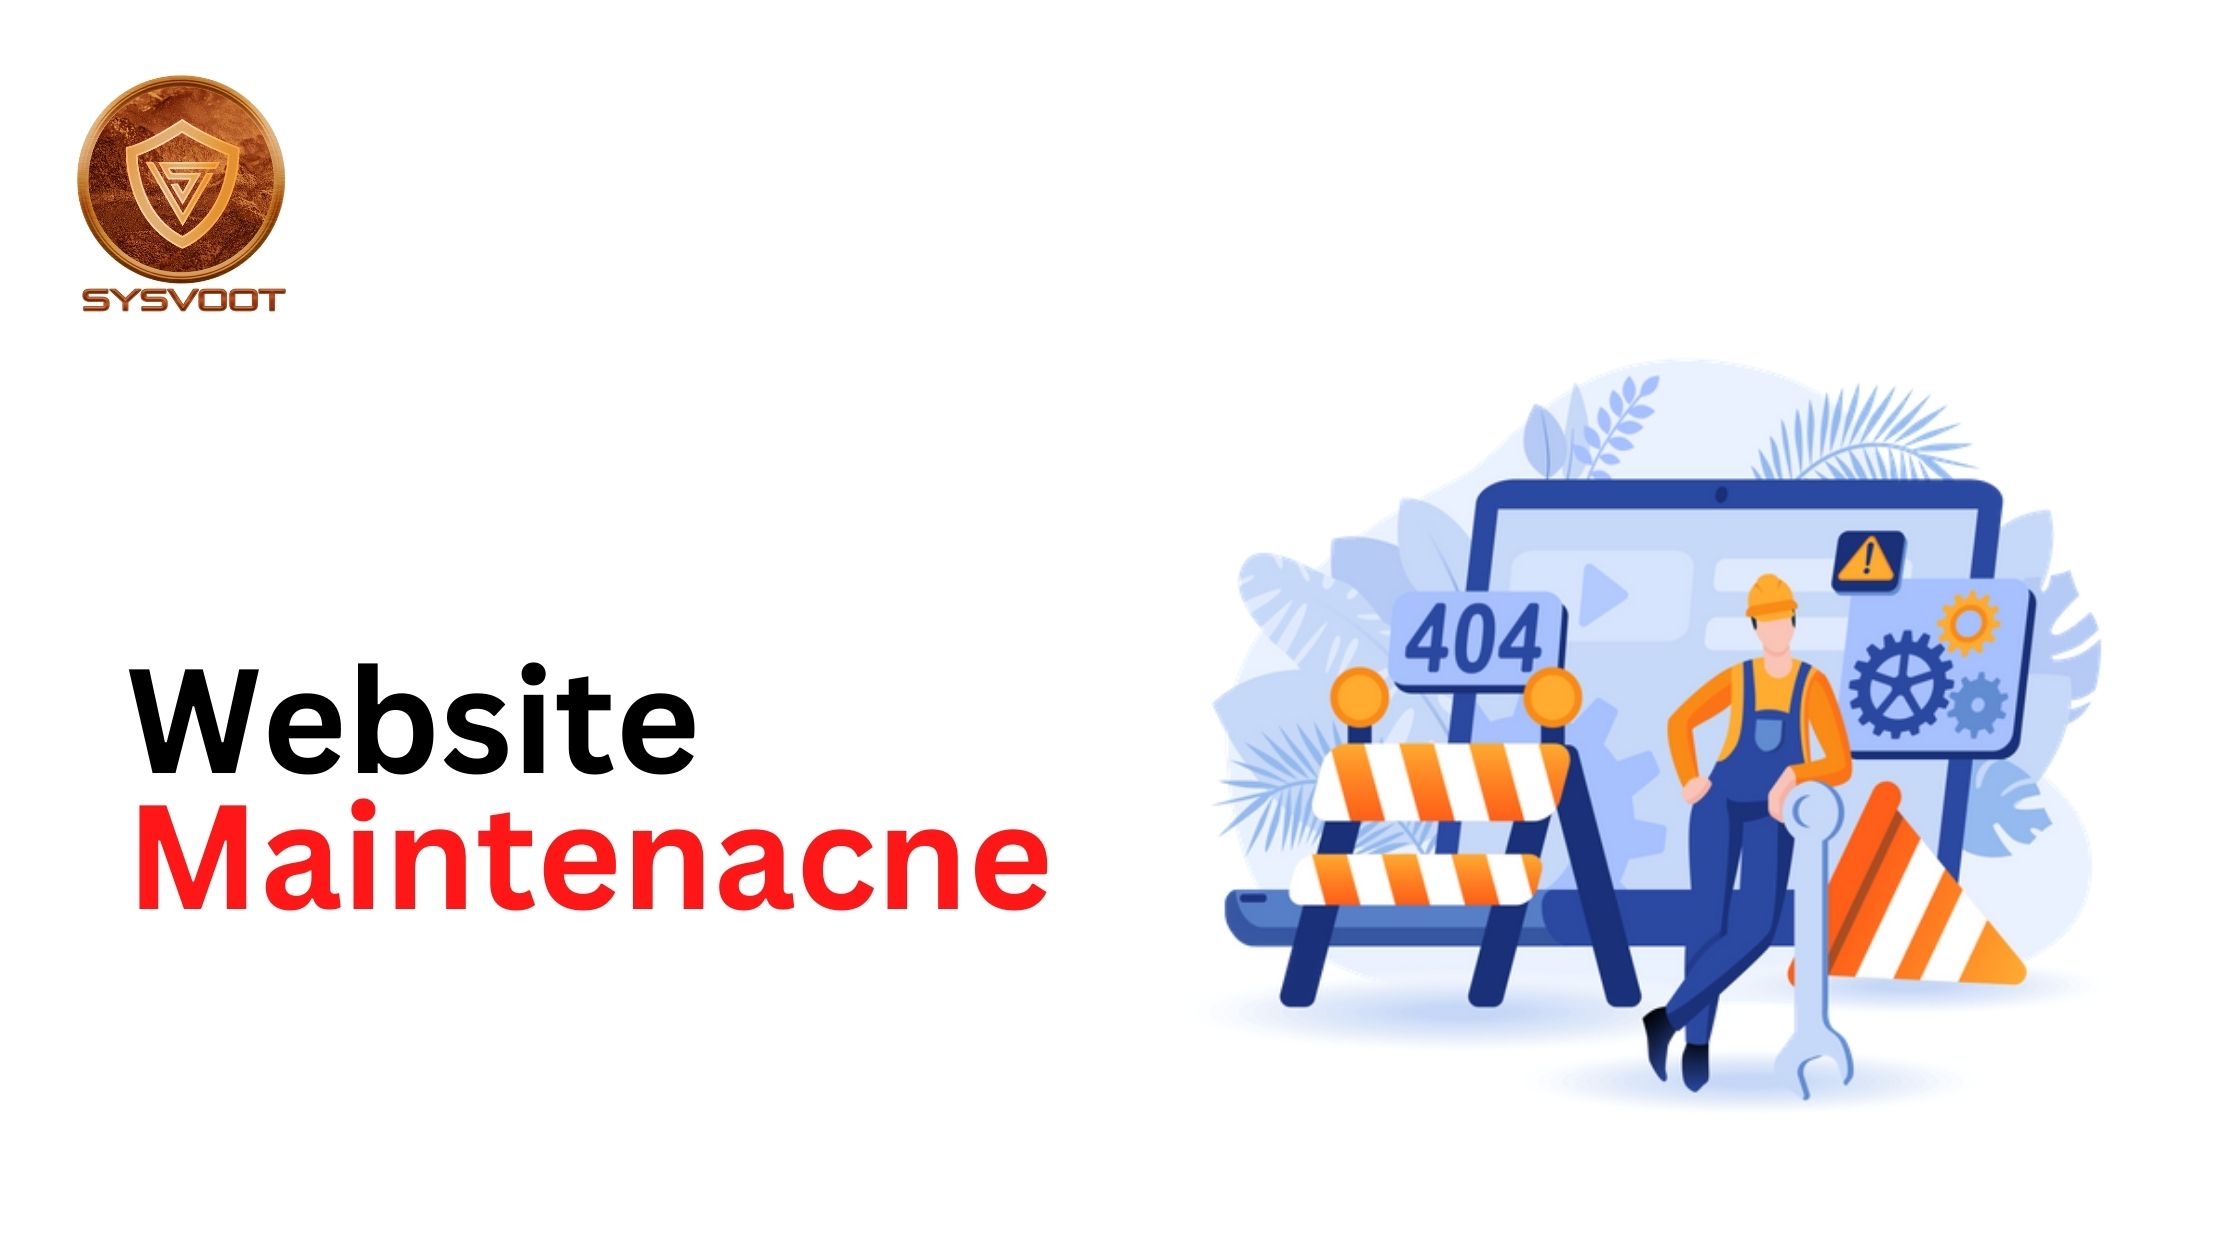 Website Maintenacne-c9aaf0c0